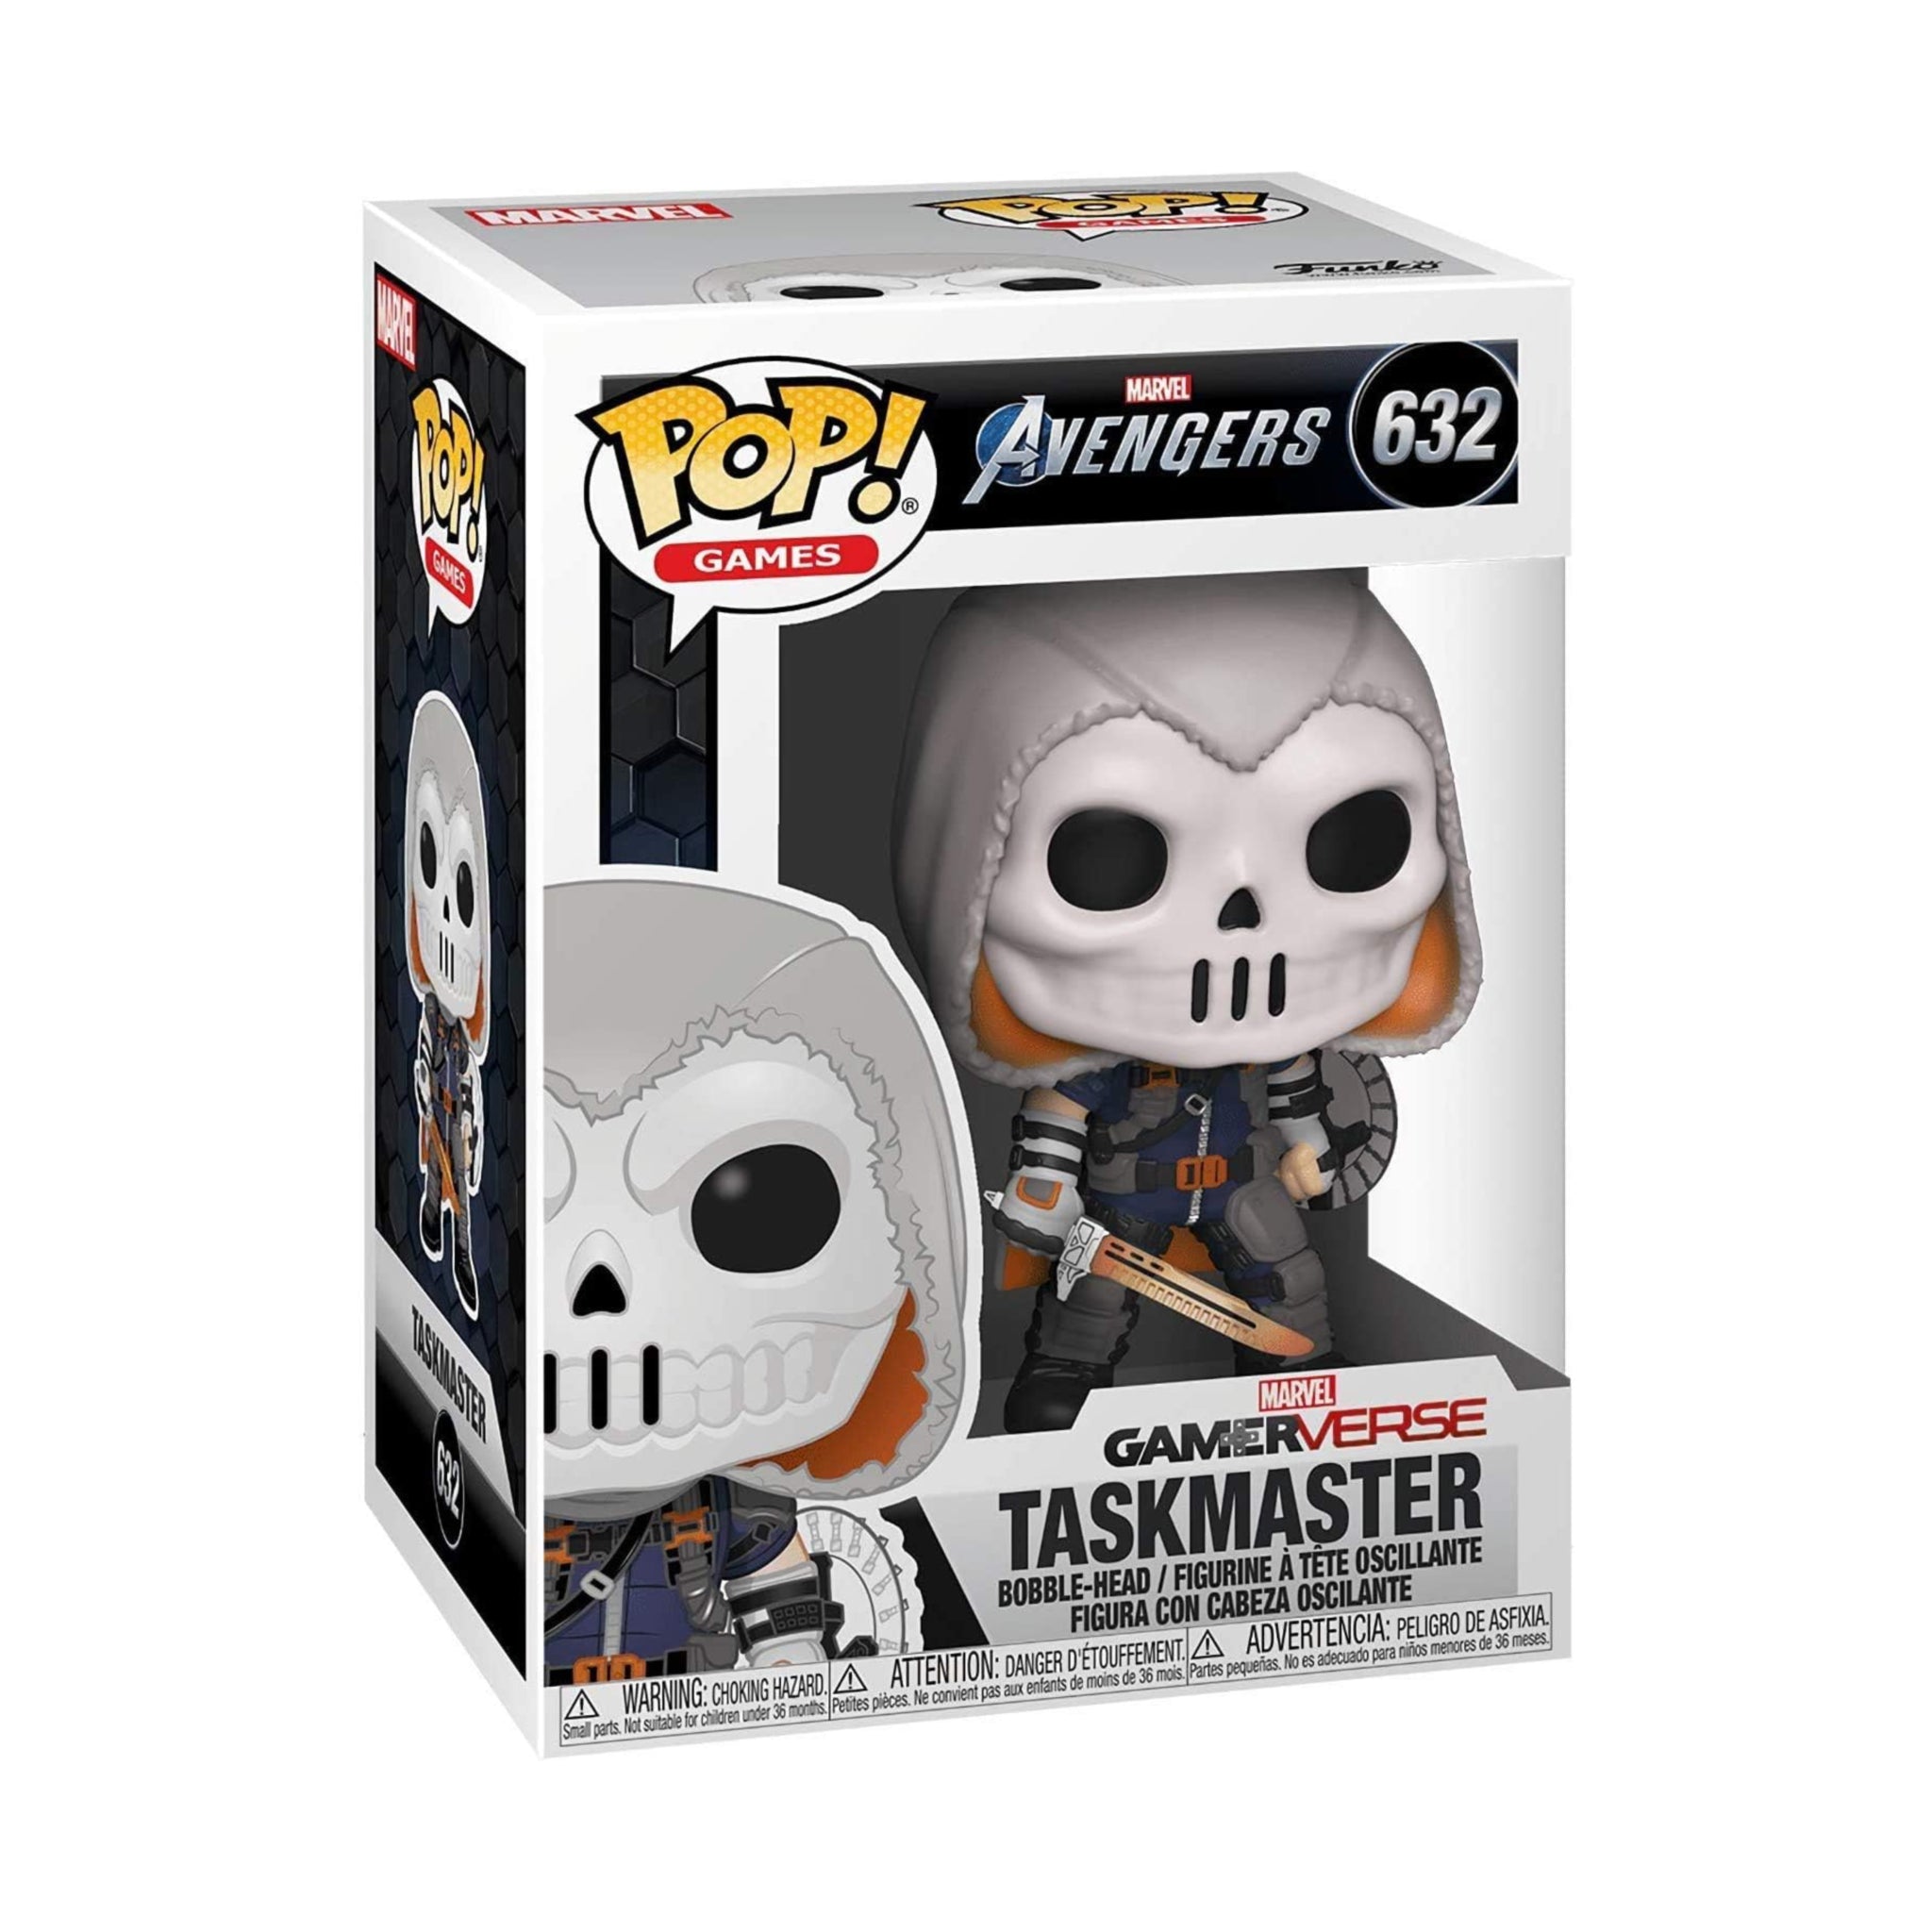 Taskmaster Funko Pop!